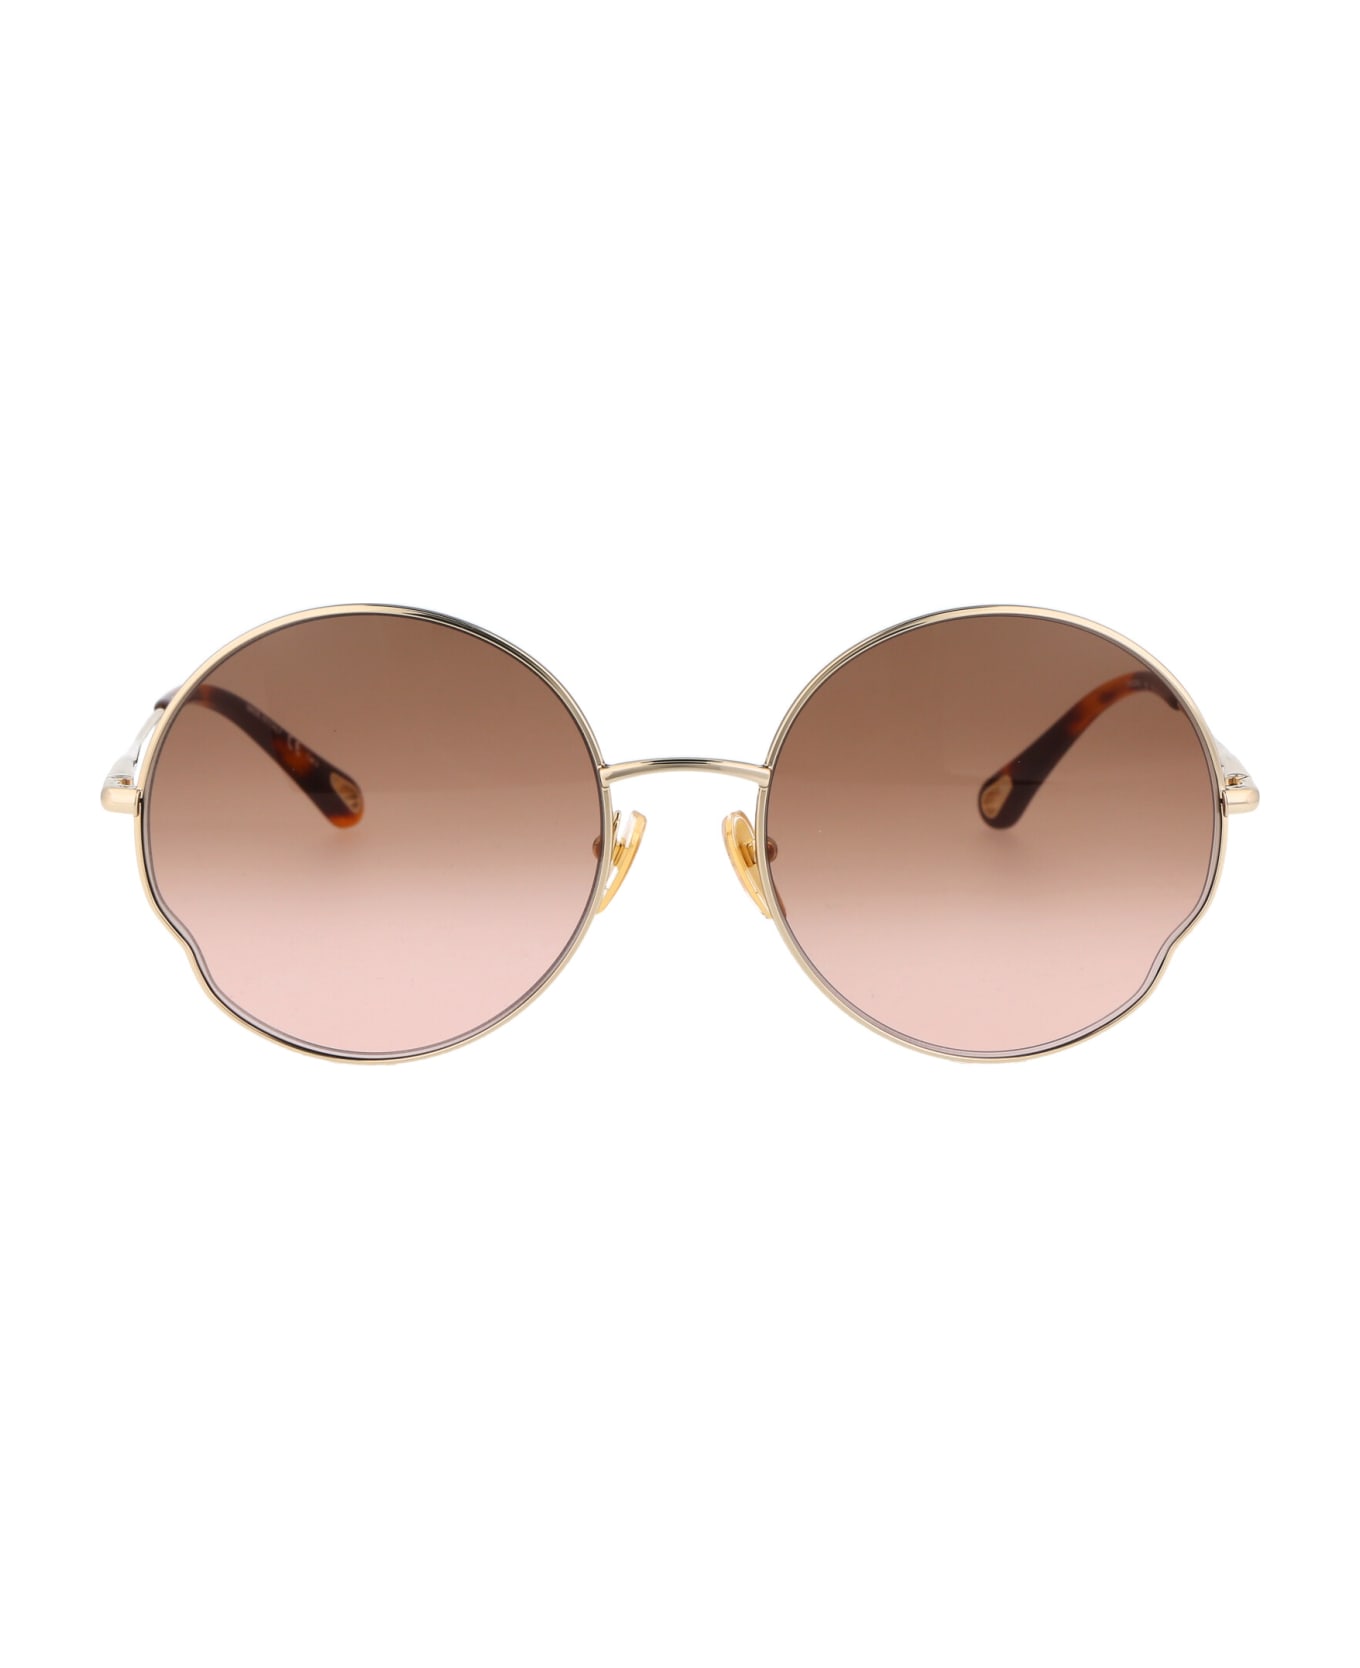 Chloé Eyewear Ch0095s Sunglasses - 001 GOLD GOLD BROWN